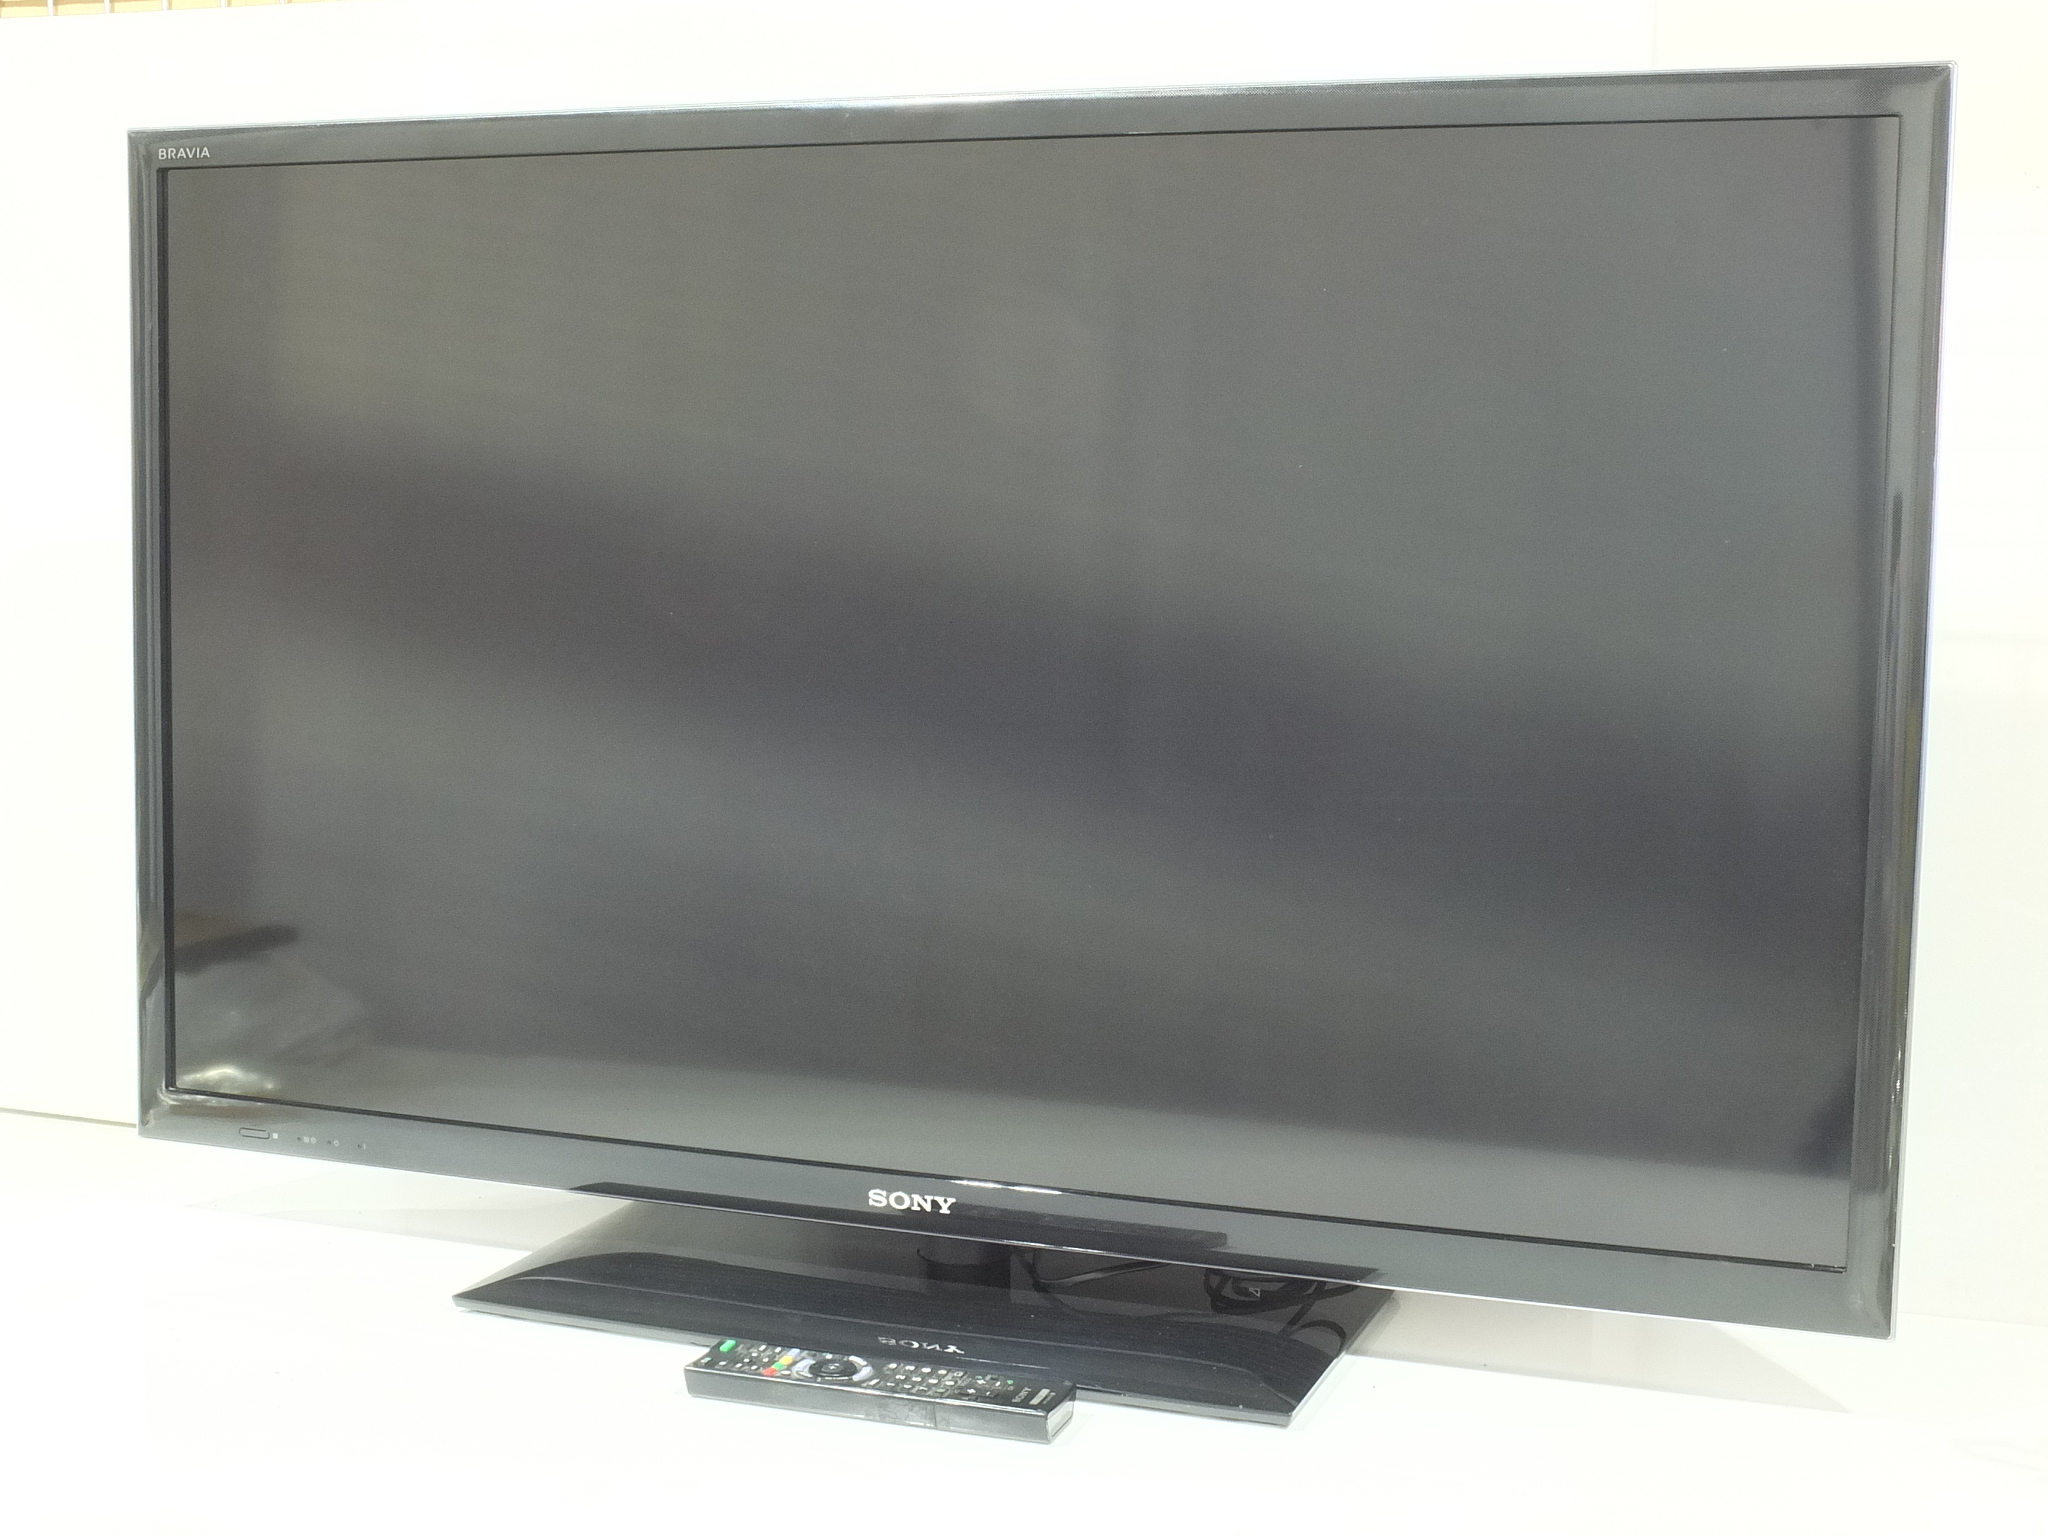 Sony 46 Inch LCD TV - Lot 951914 | ALLBIDS